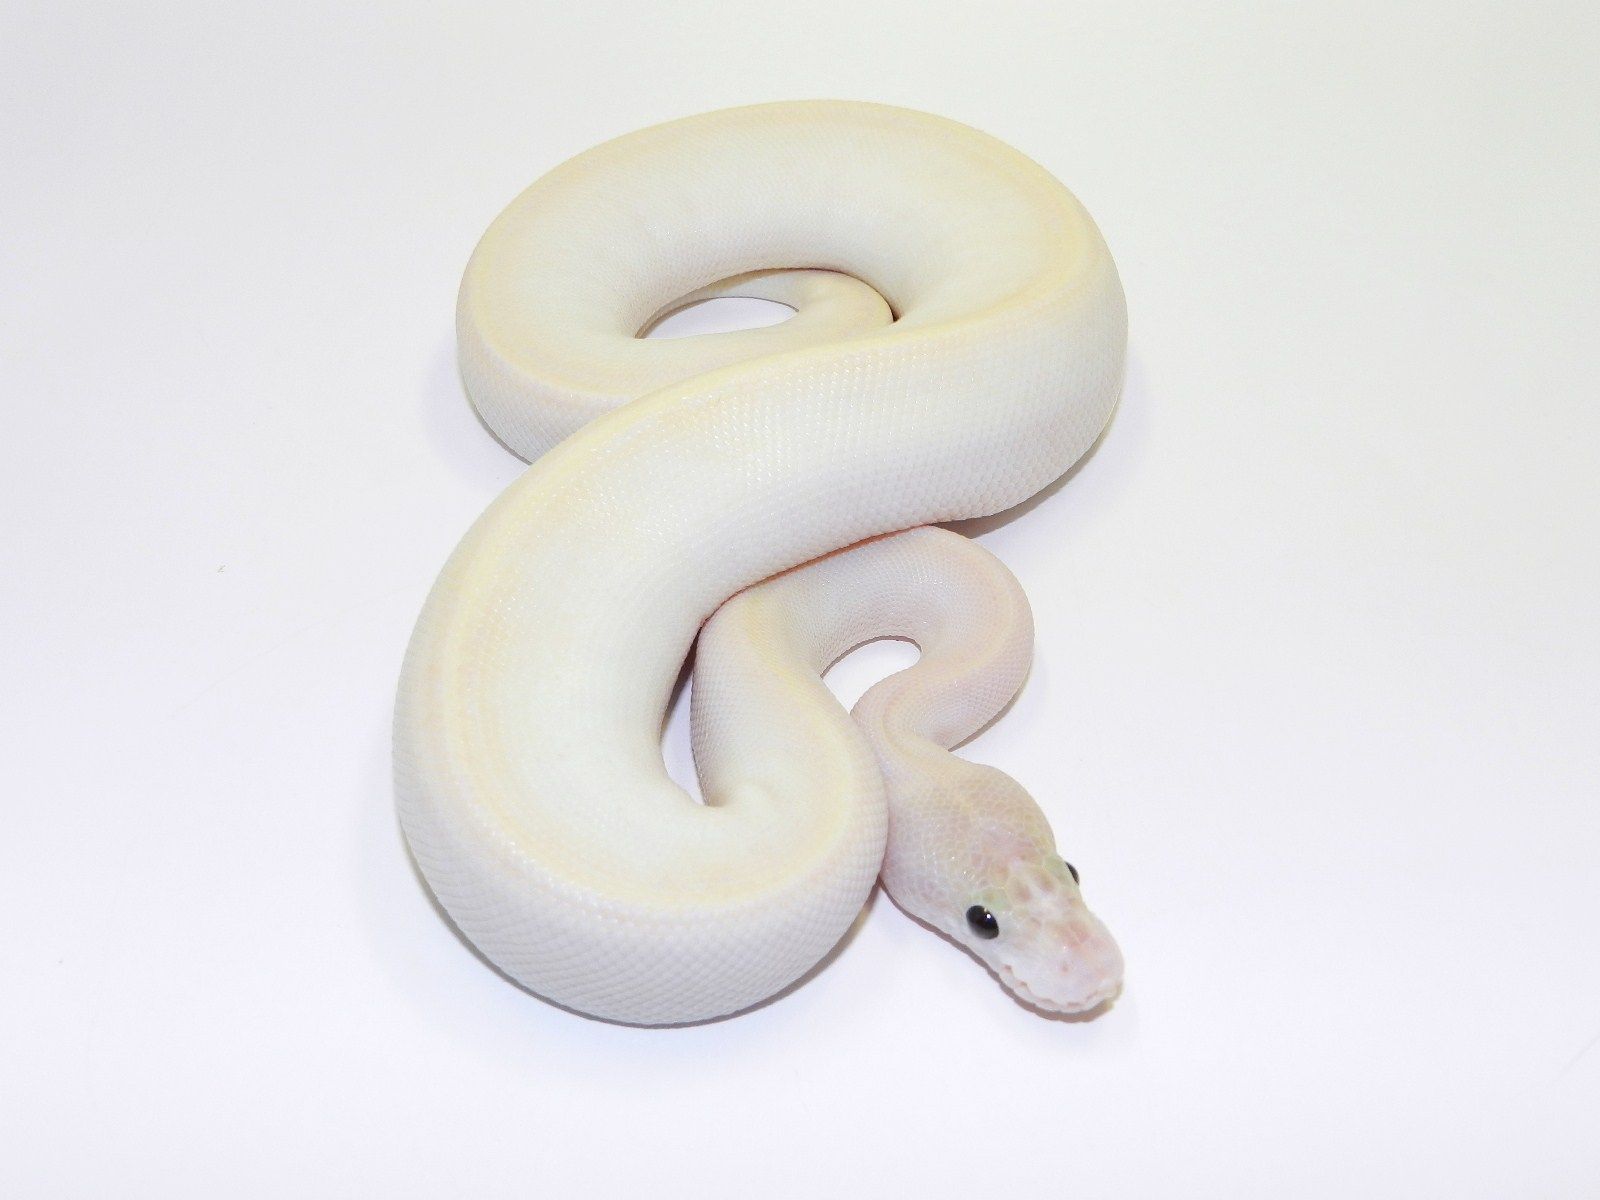 White Snakes Wallpaper Free .wallpaperaccess.com